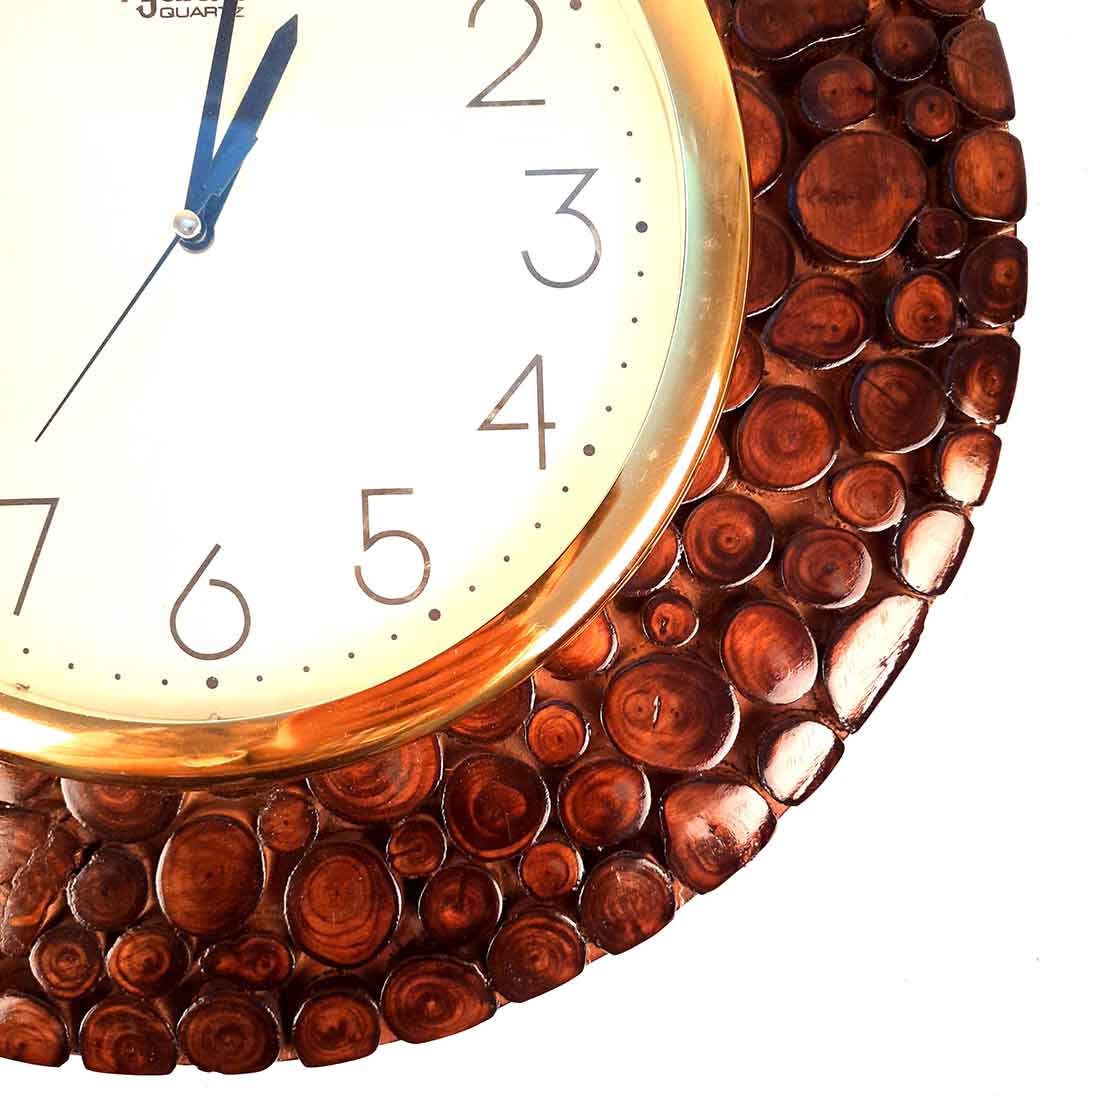 Designer Wall Clock | Wall Clock - For Wedding & Anniversary Gift - 16 Inch - ApkaMart